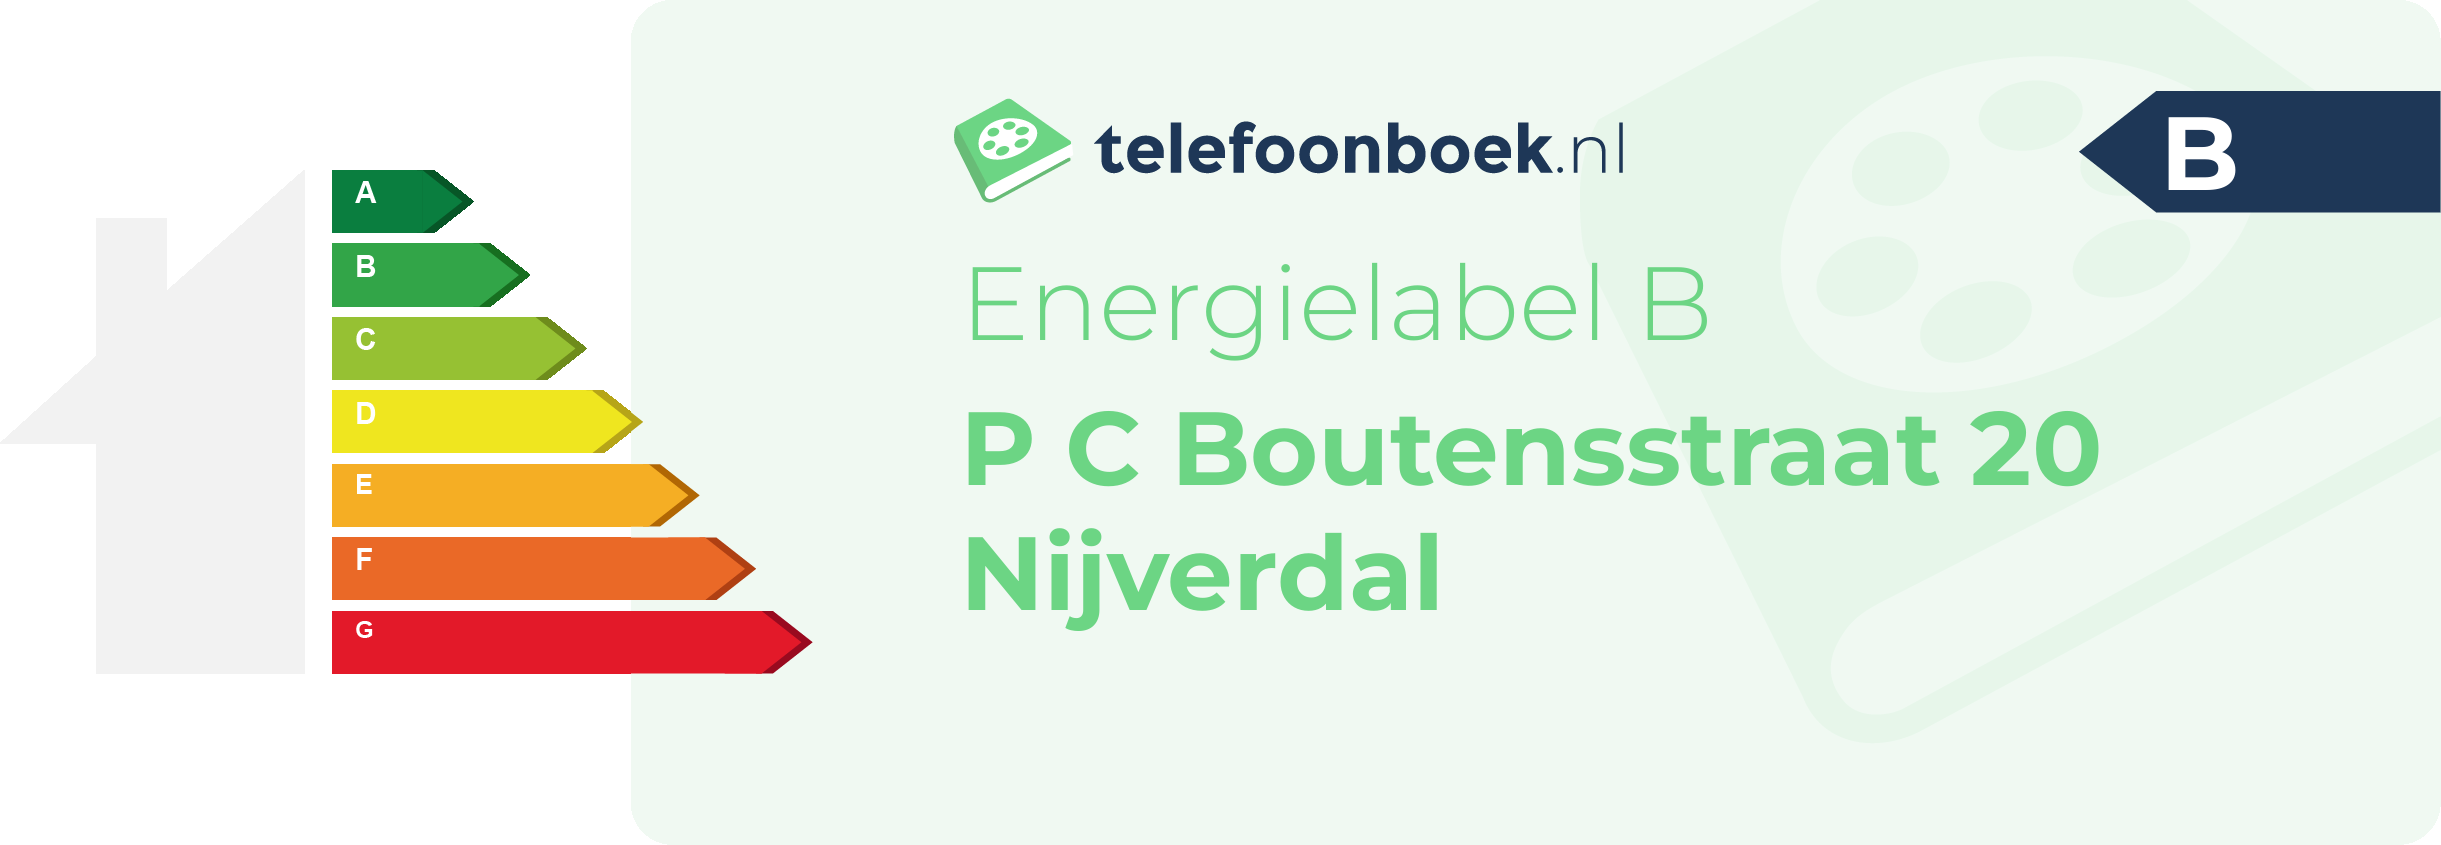 Energielabel P C Boutensstraat 20 Nijverdal